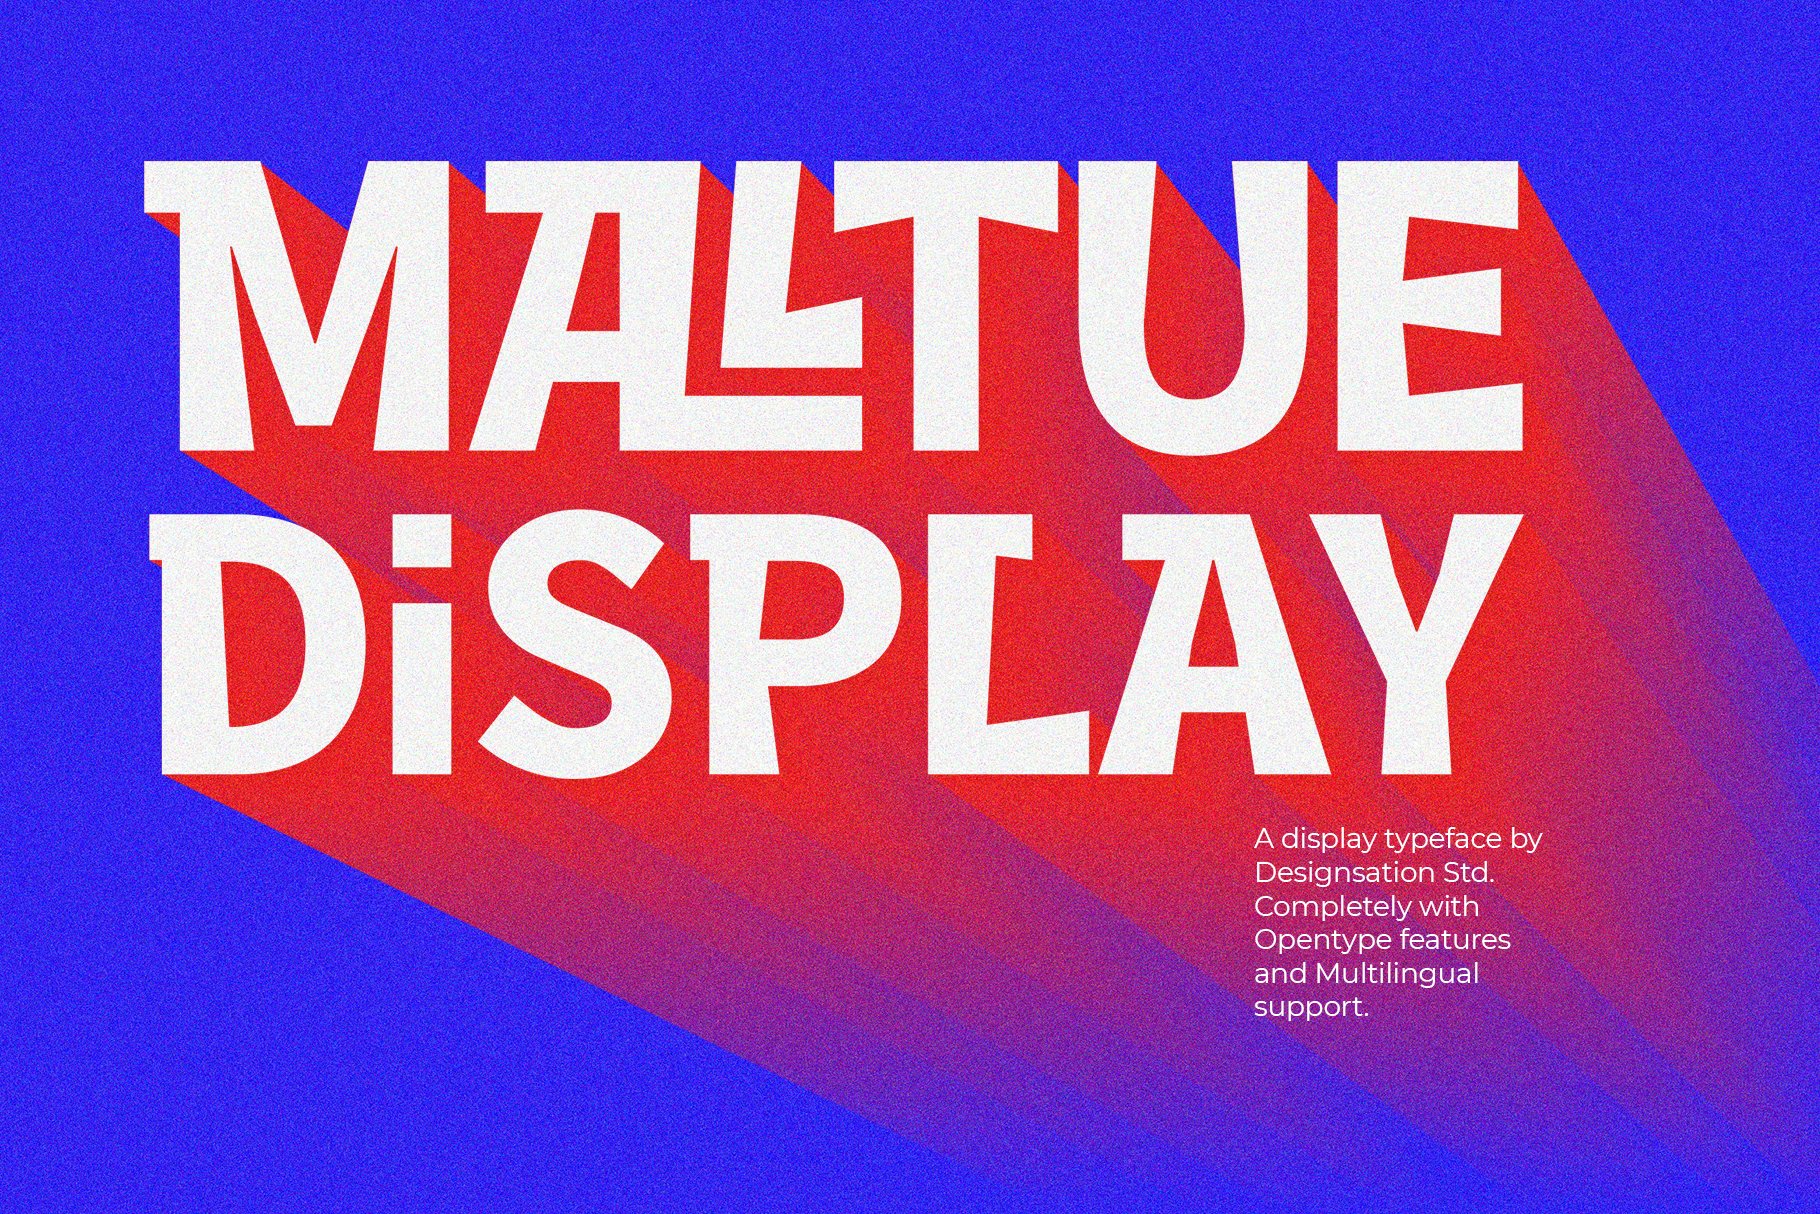 Maltu Tropical Display Typeface cover image.